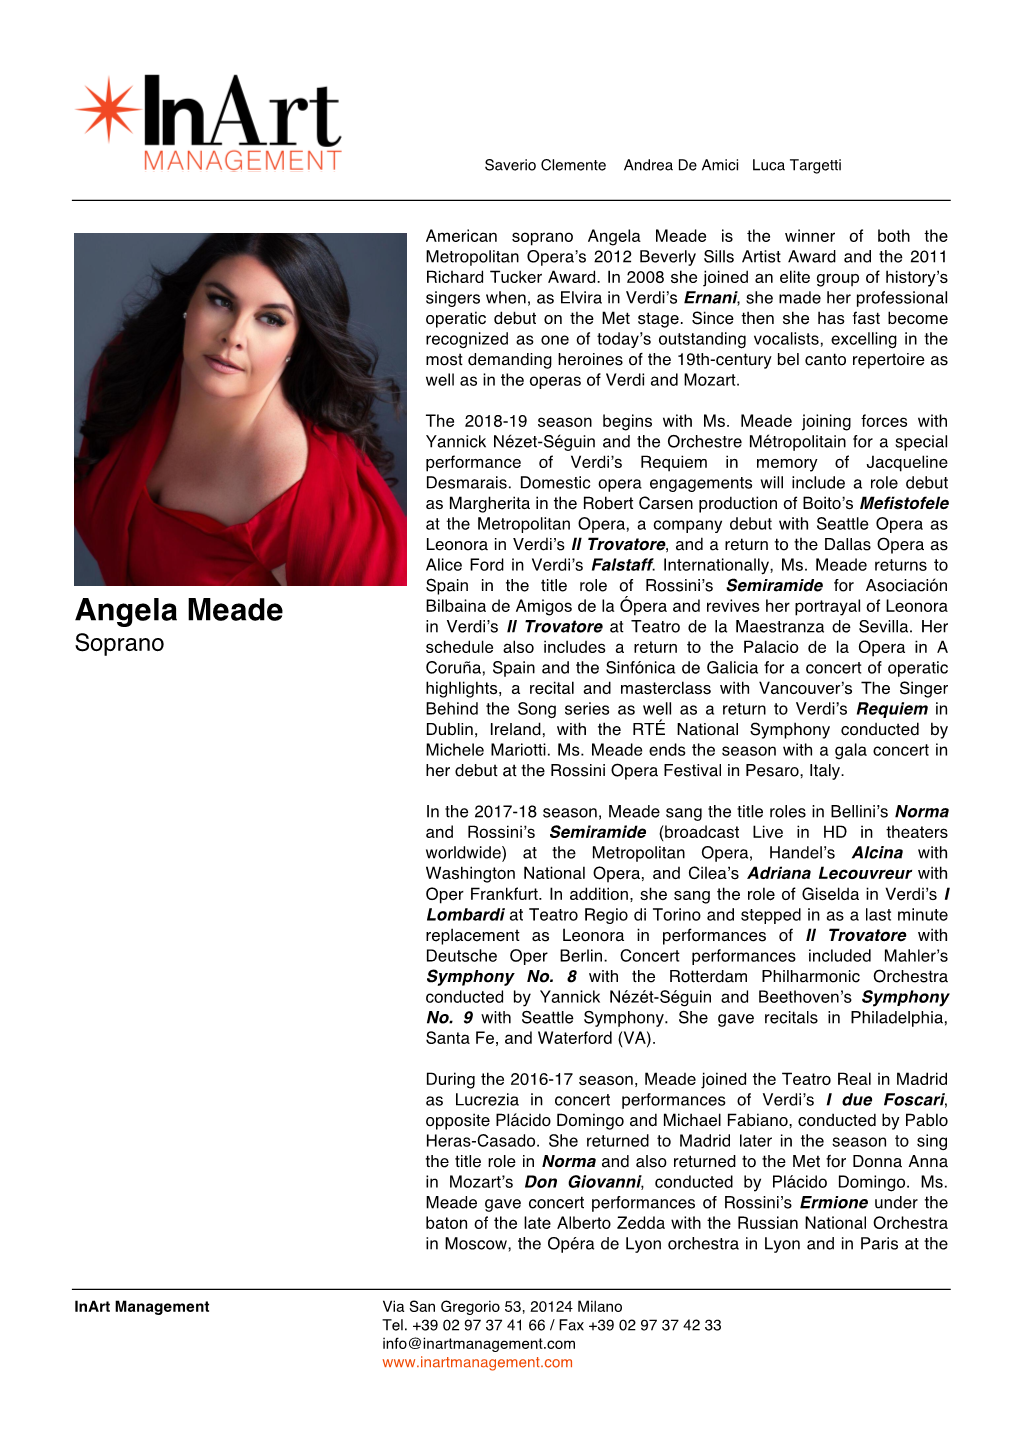 Angela Meade Is the Winner of Both the Metropolitan Opera’S 2012 Beverly Sills Artist Award and the 2011 Richard Tucker Award